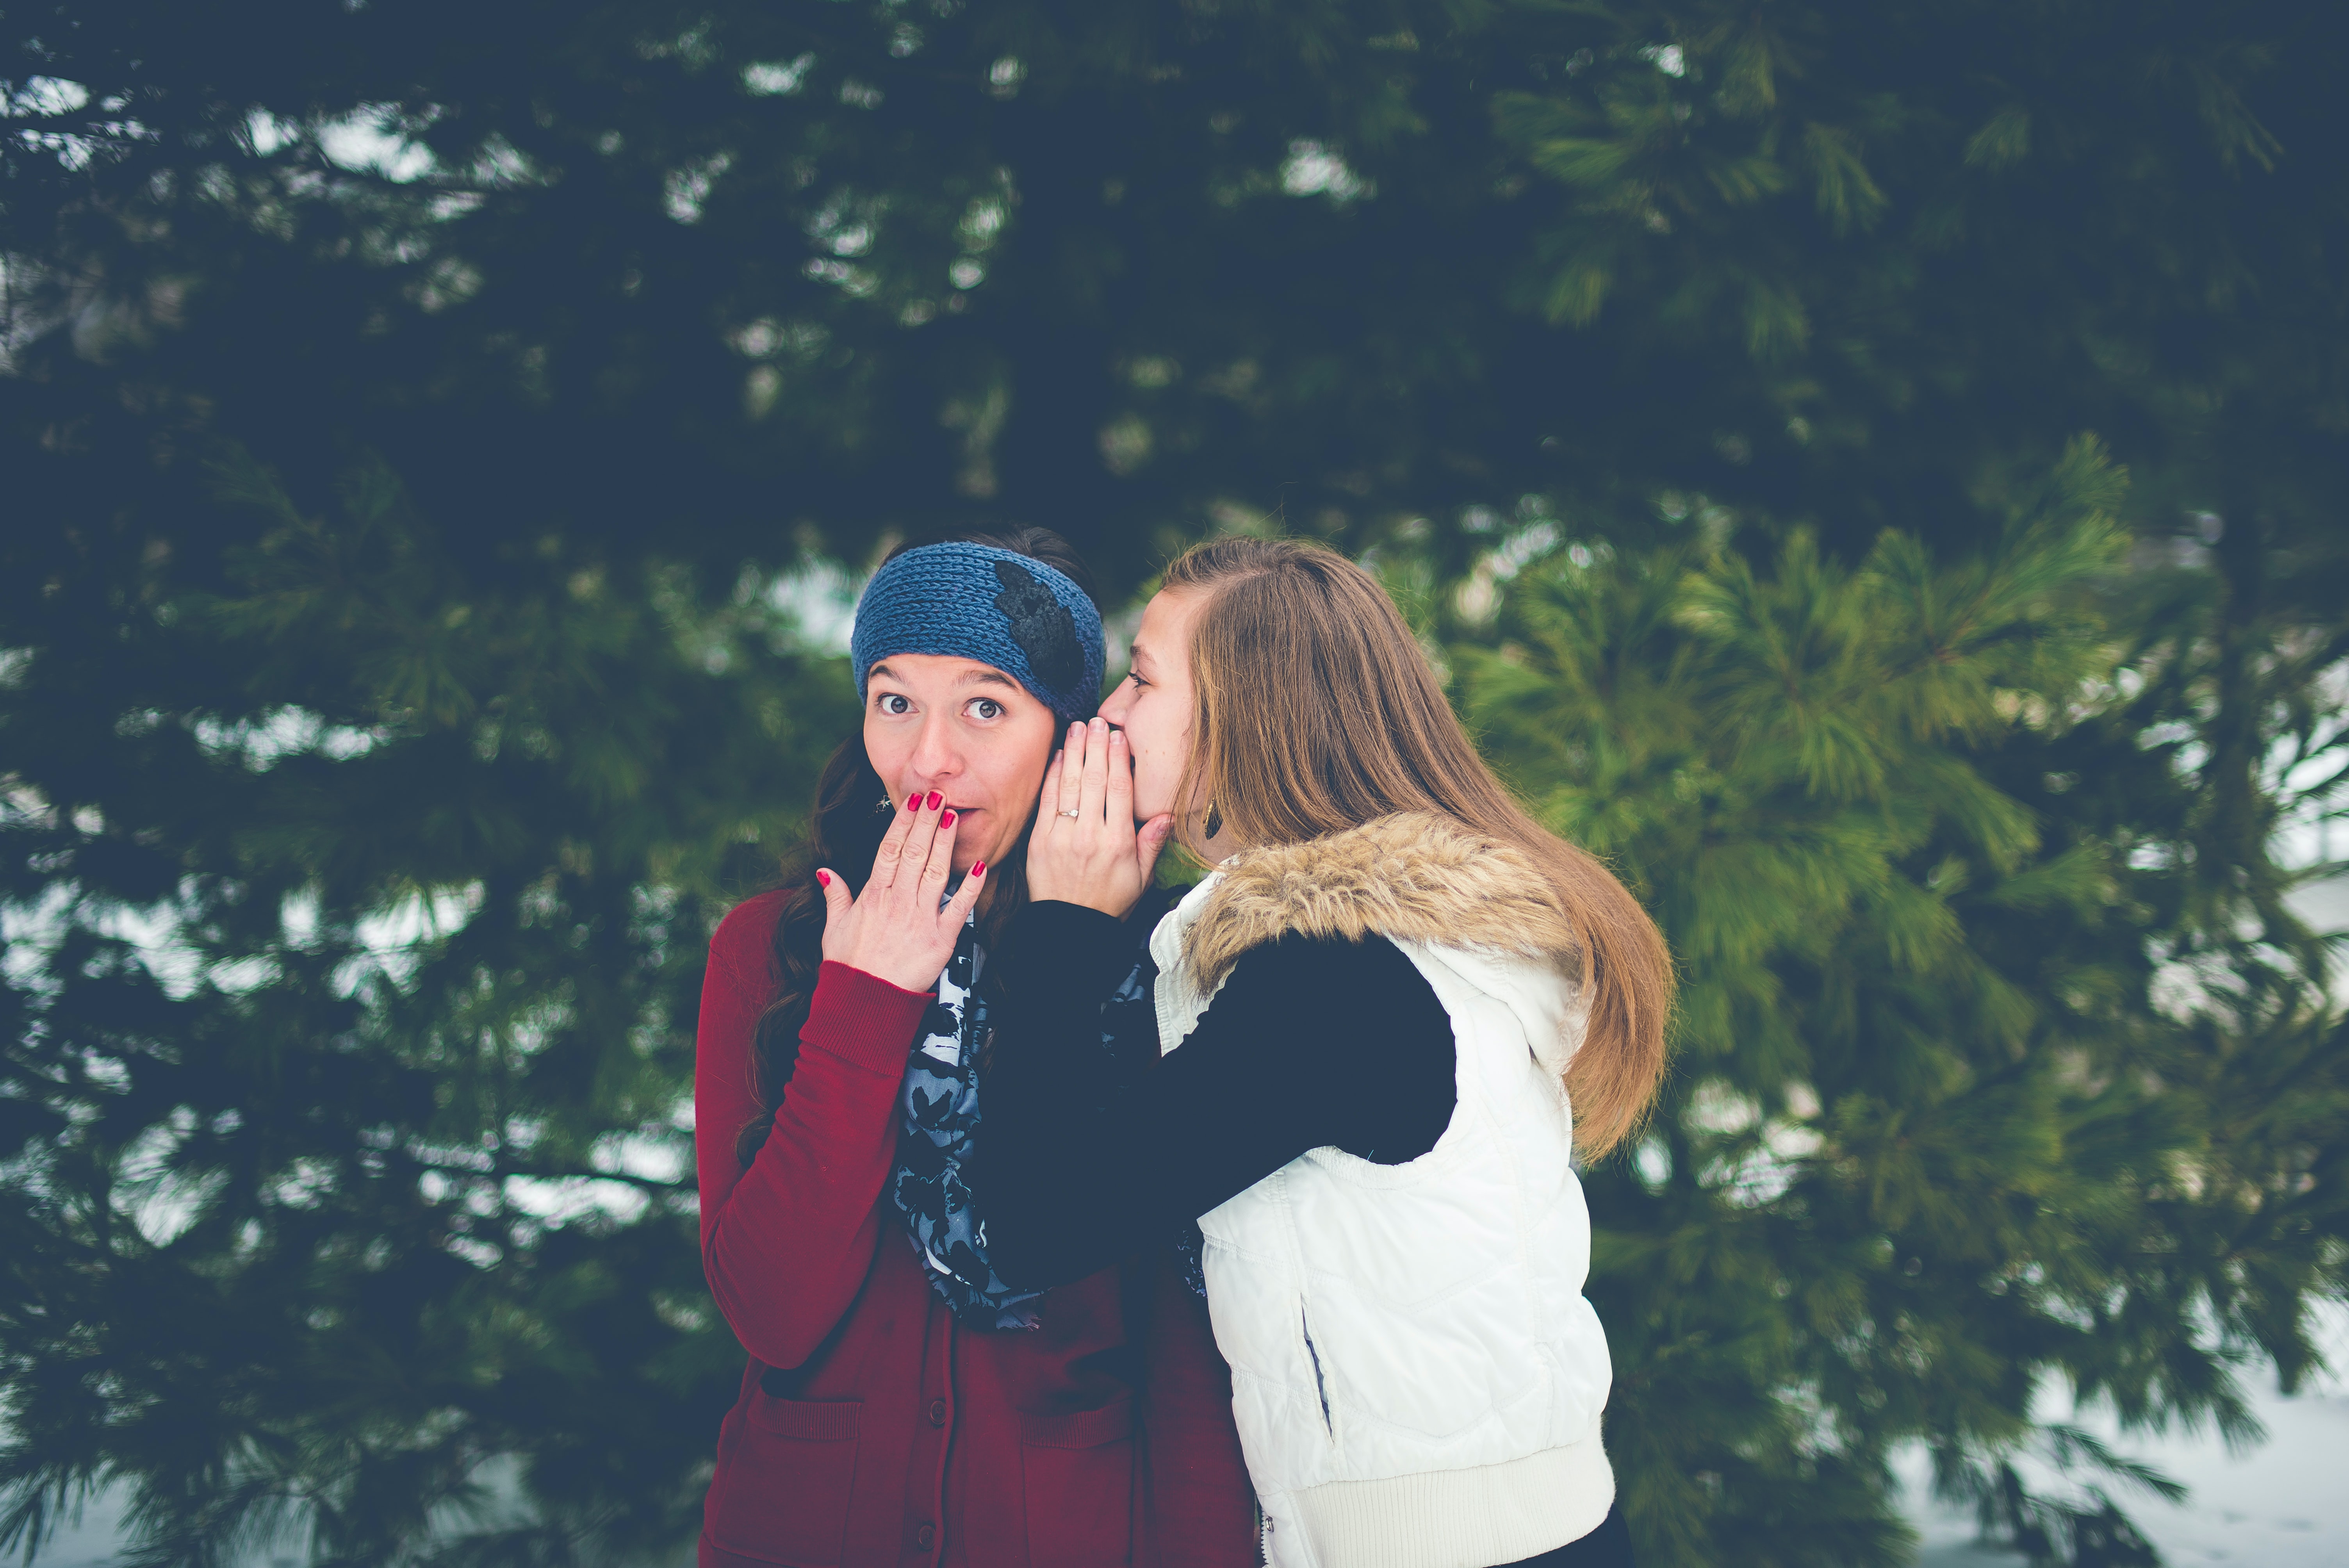 Teenagers gossiping